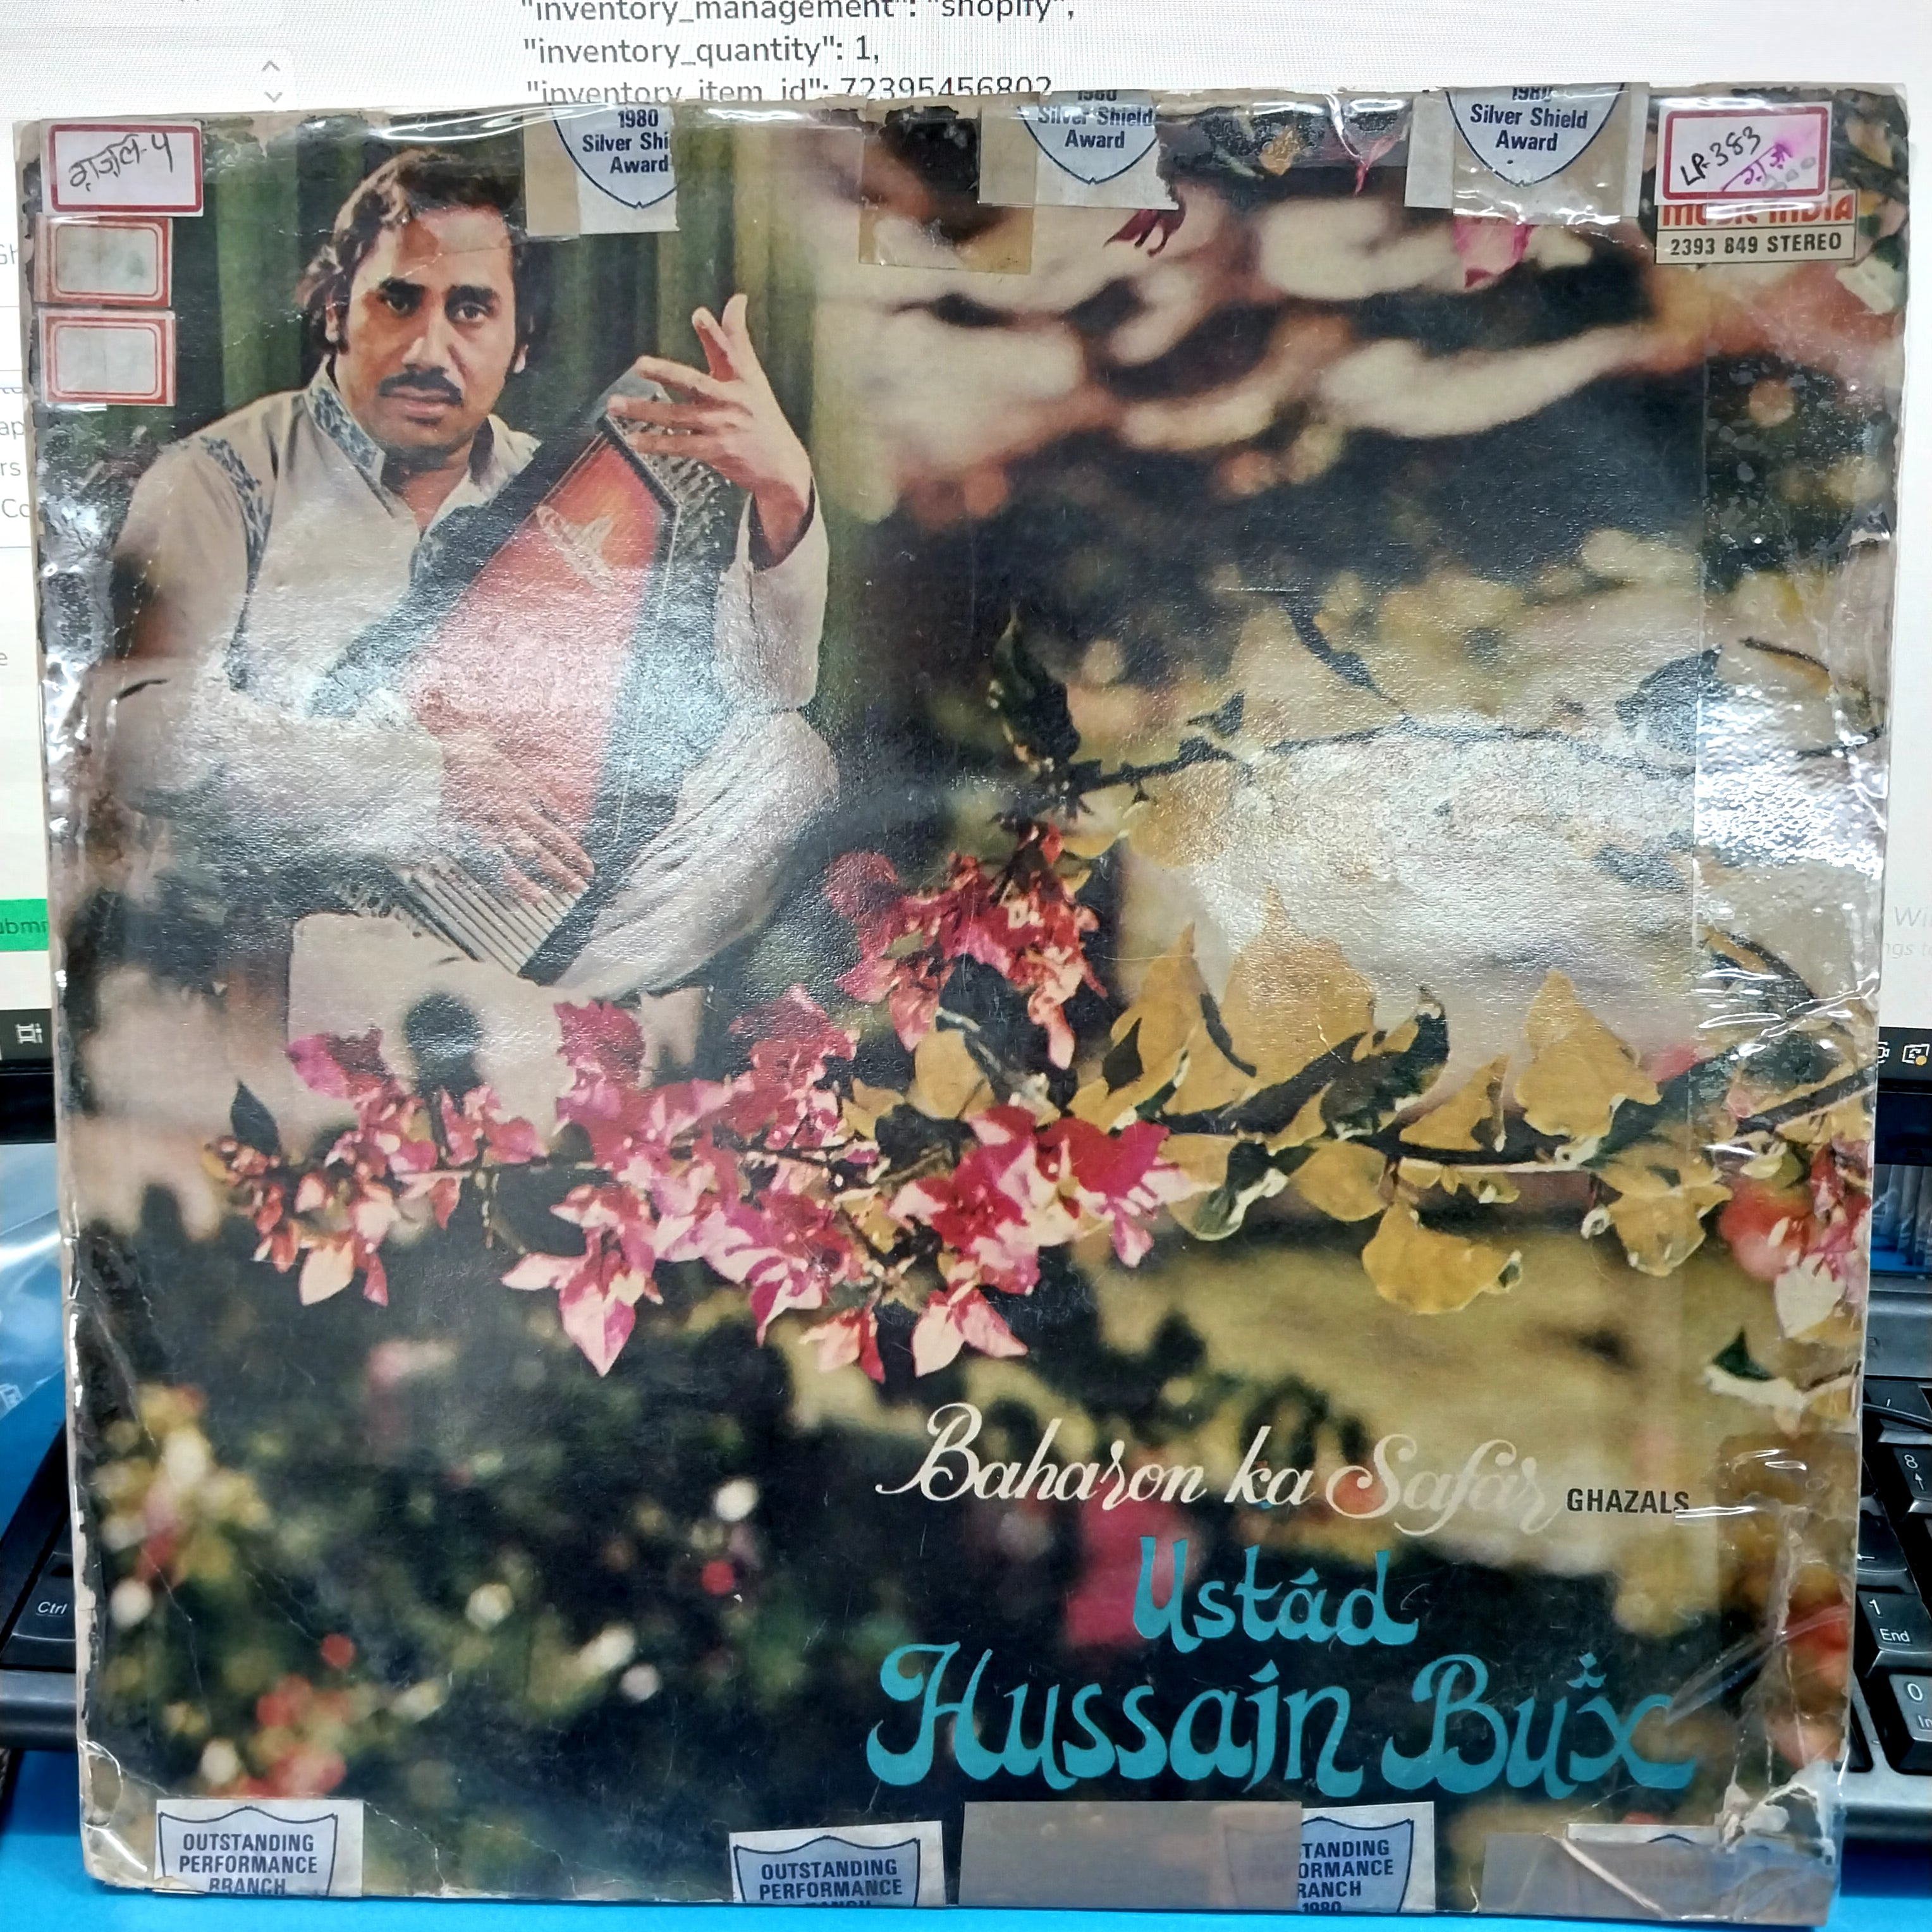 Ustad Hussain Bux - Baharon Ka Safar (Ghazals) (Vinyl)